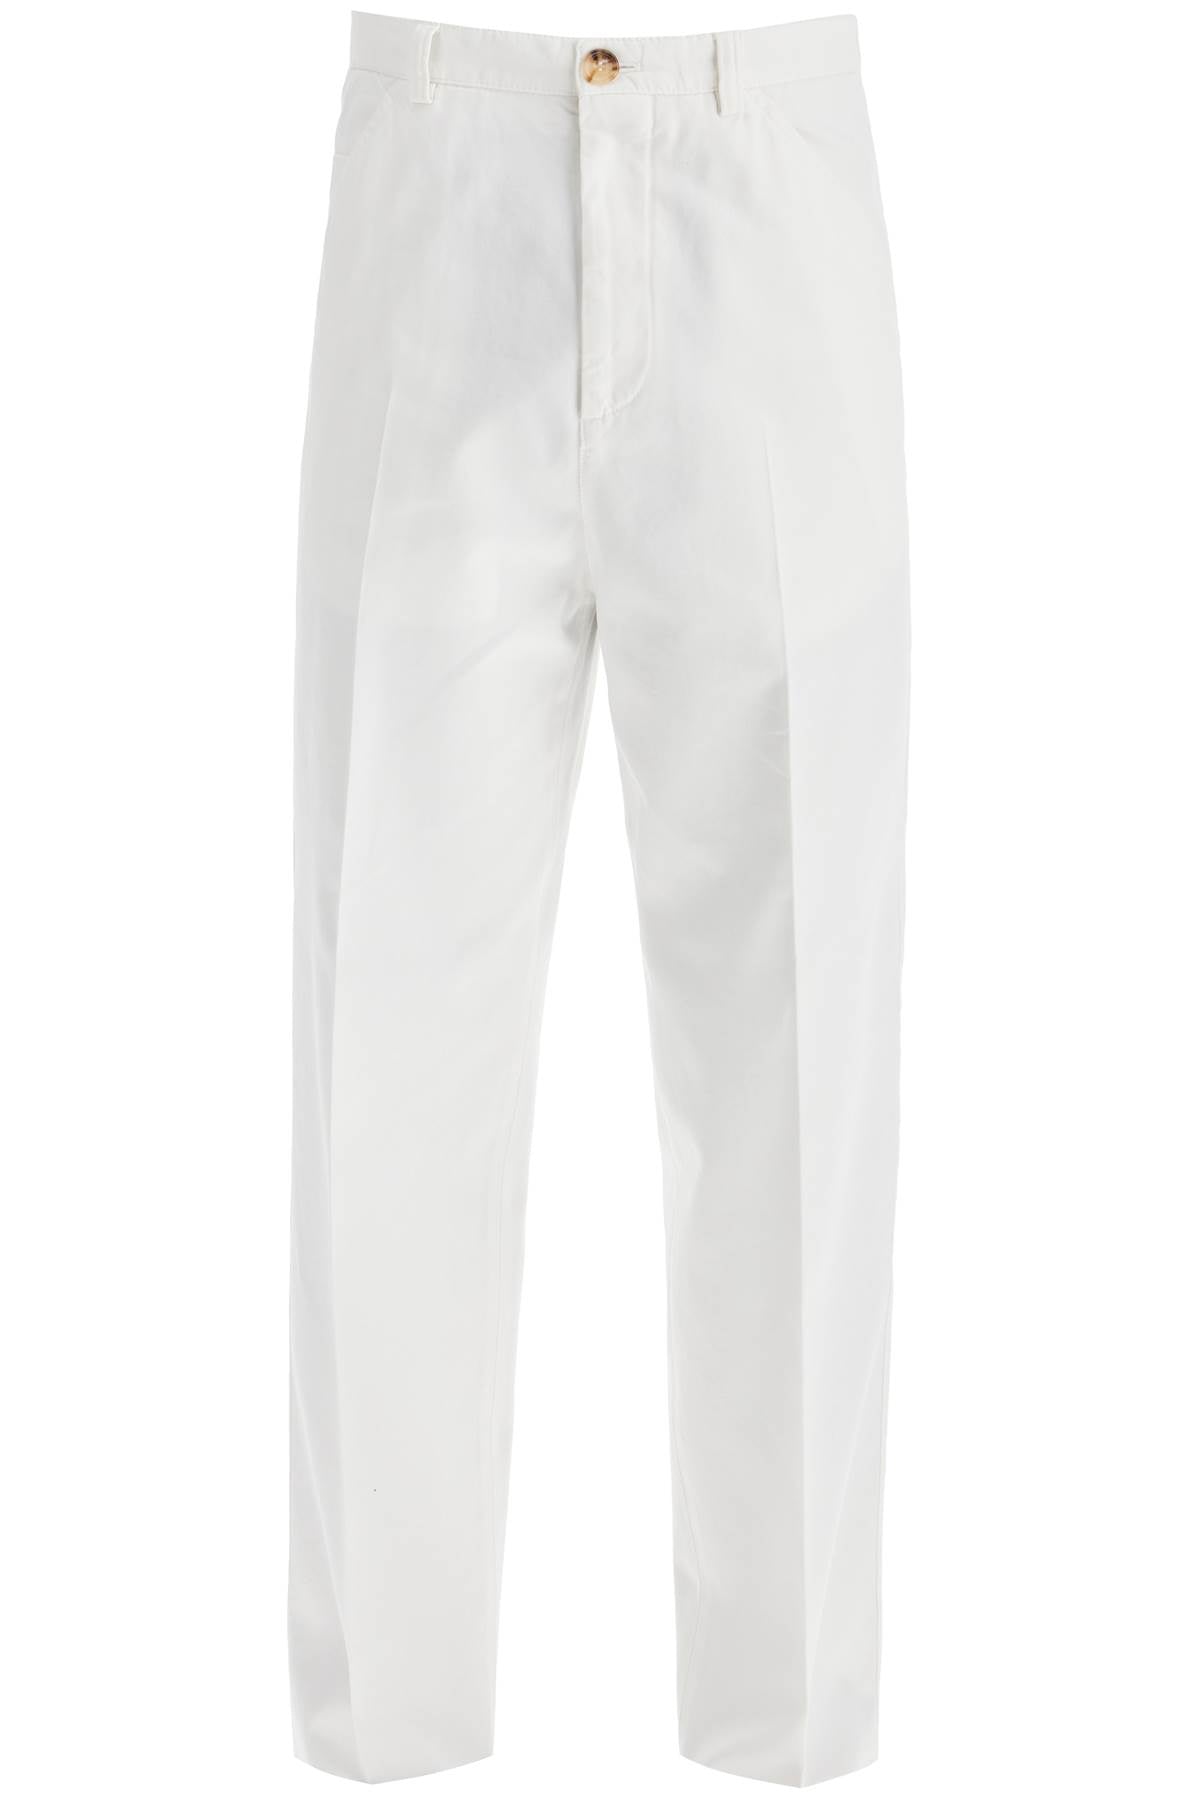 Brunello Cucinelli twill gabardine trousers with garment